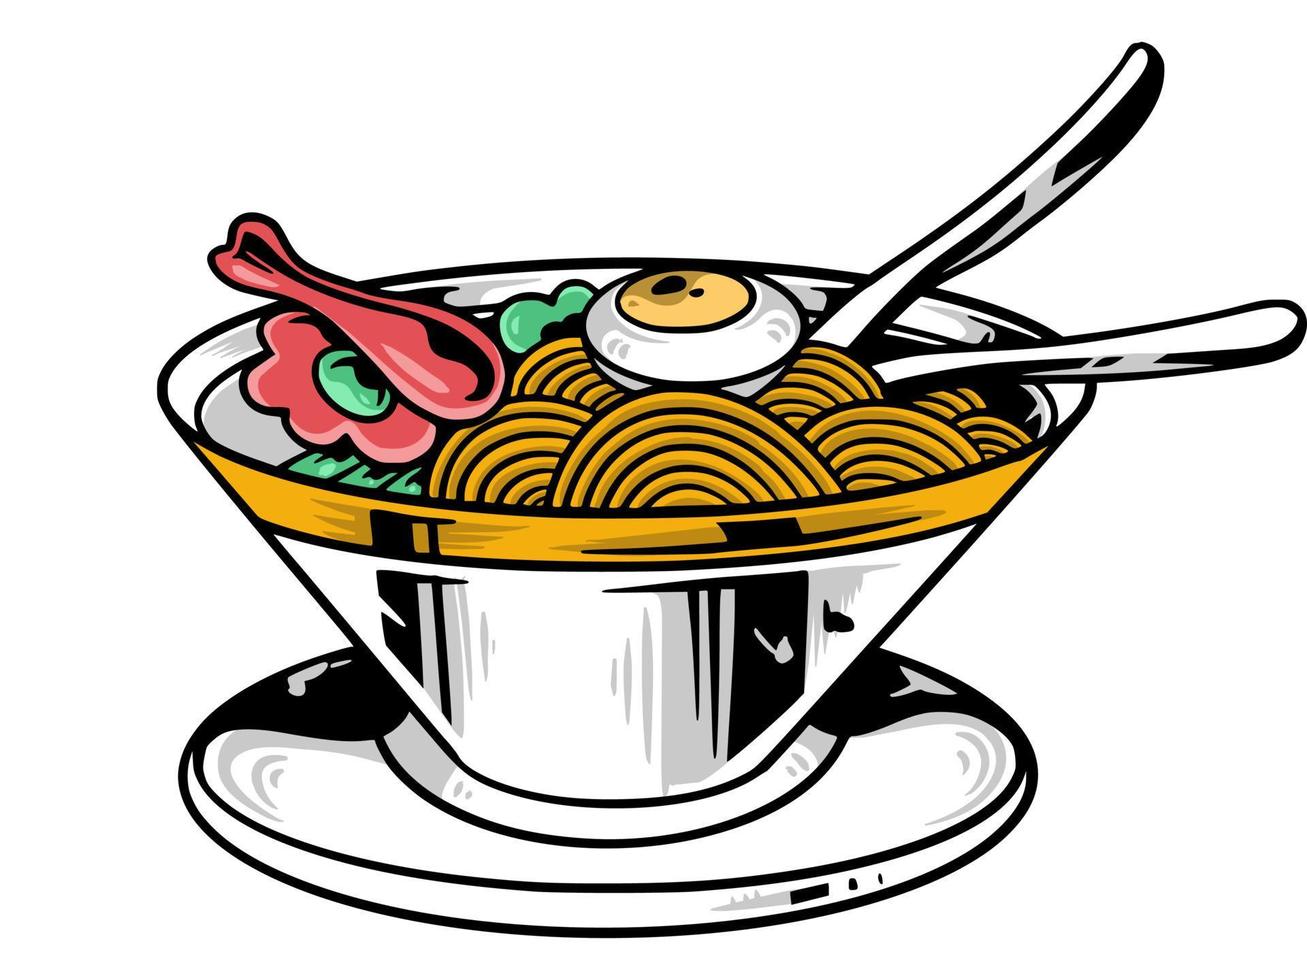 Ramen noodles illustration vector